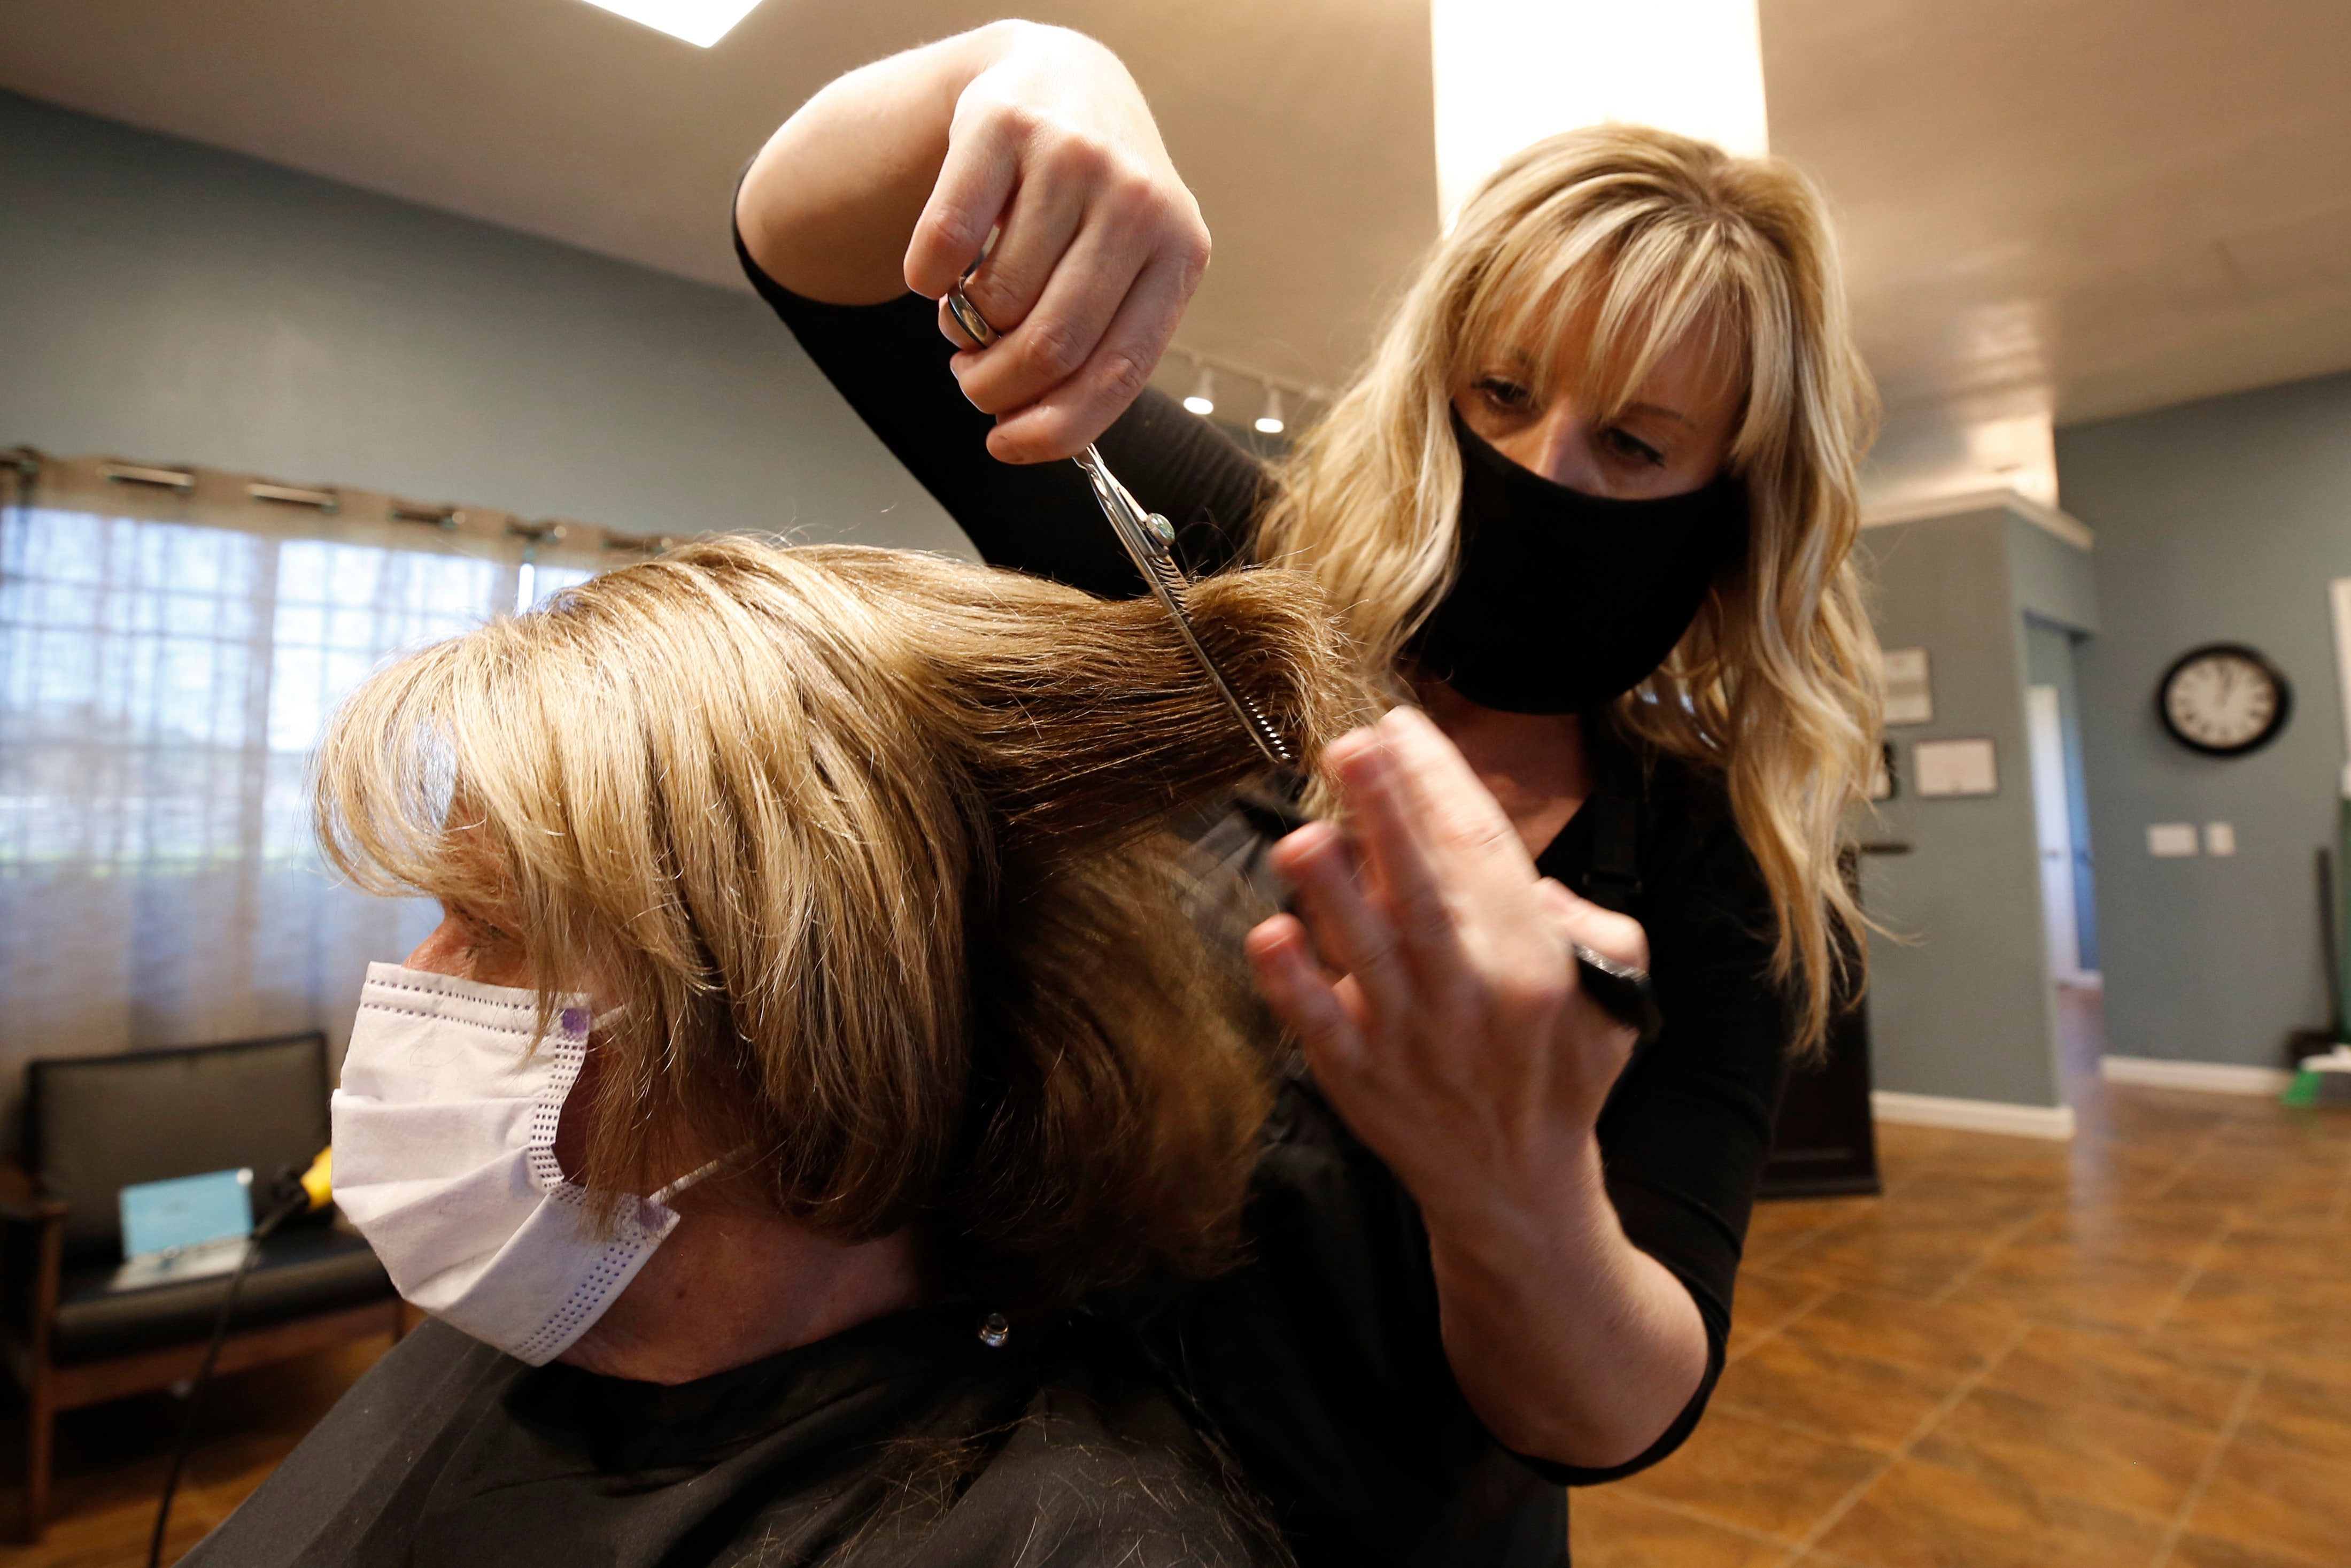 FOX NEWS: What will hair salons, barber shops look like in post-quarantine America?